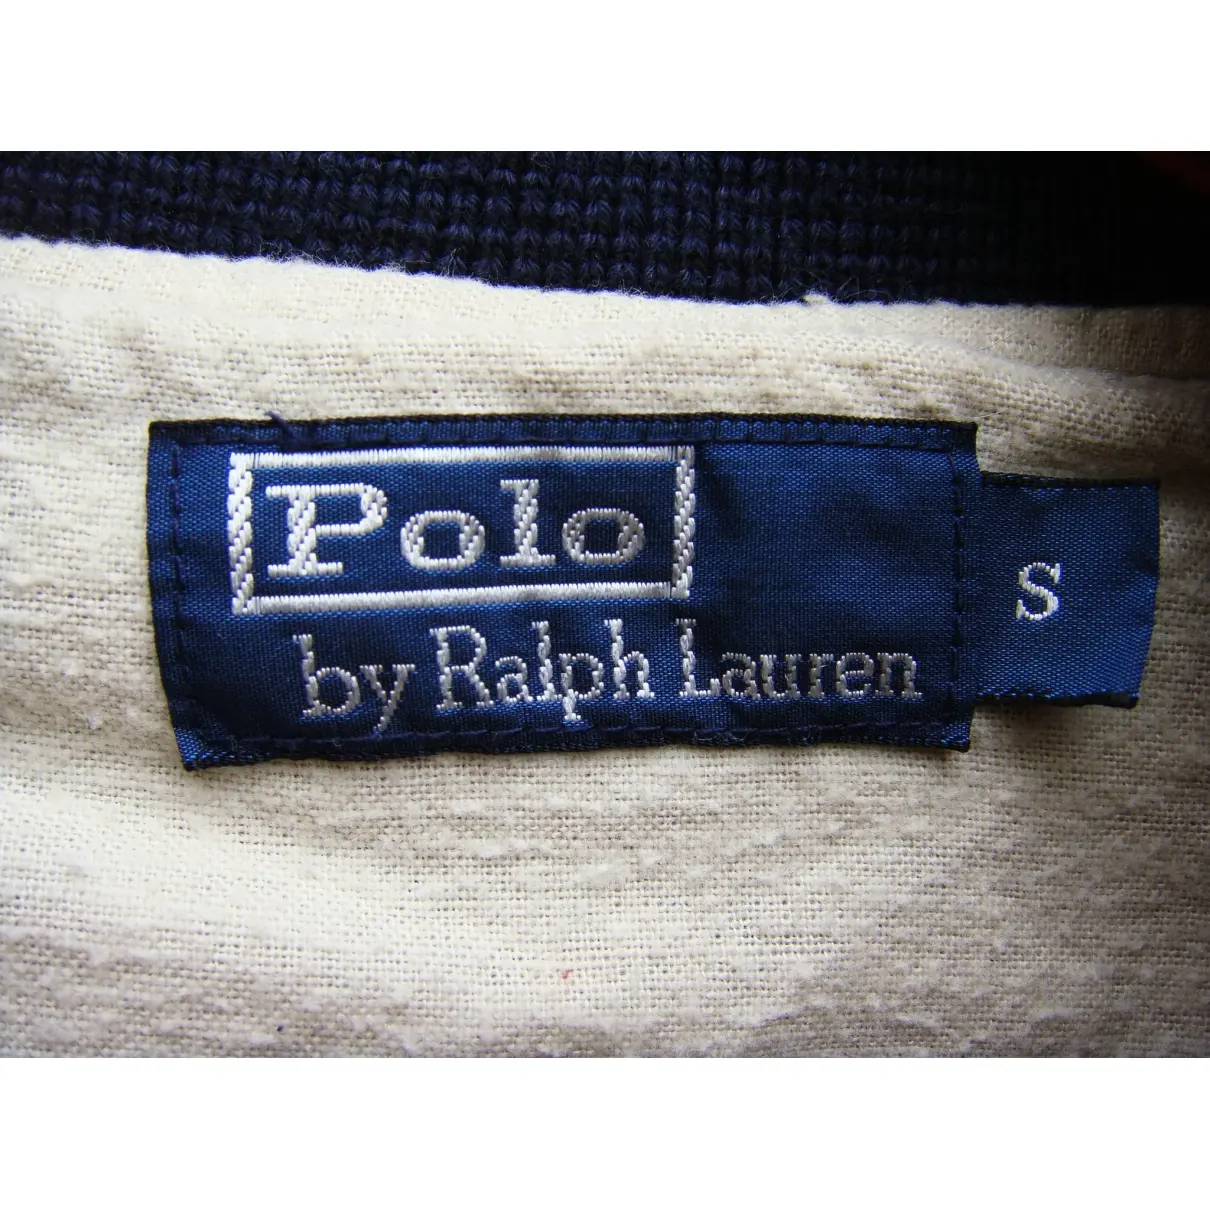 Luxury Polo Ralph Lauren Leather jackets Women